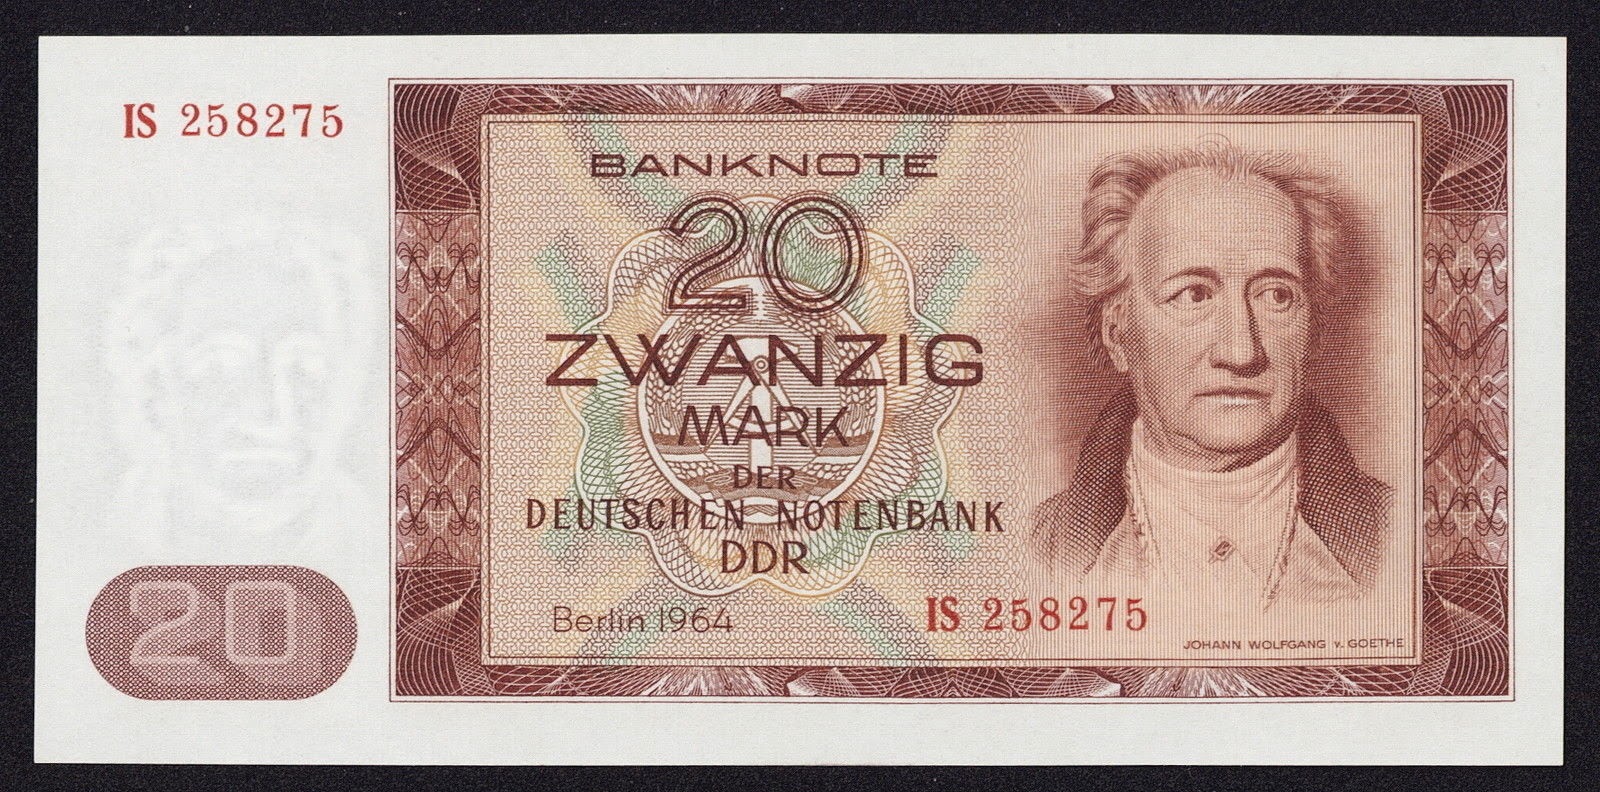 East Germany banknotes 20 Mark note 1964 Johann Wolfgang von Goethe